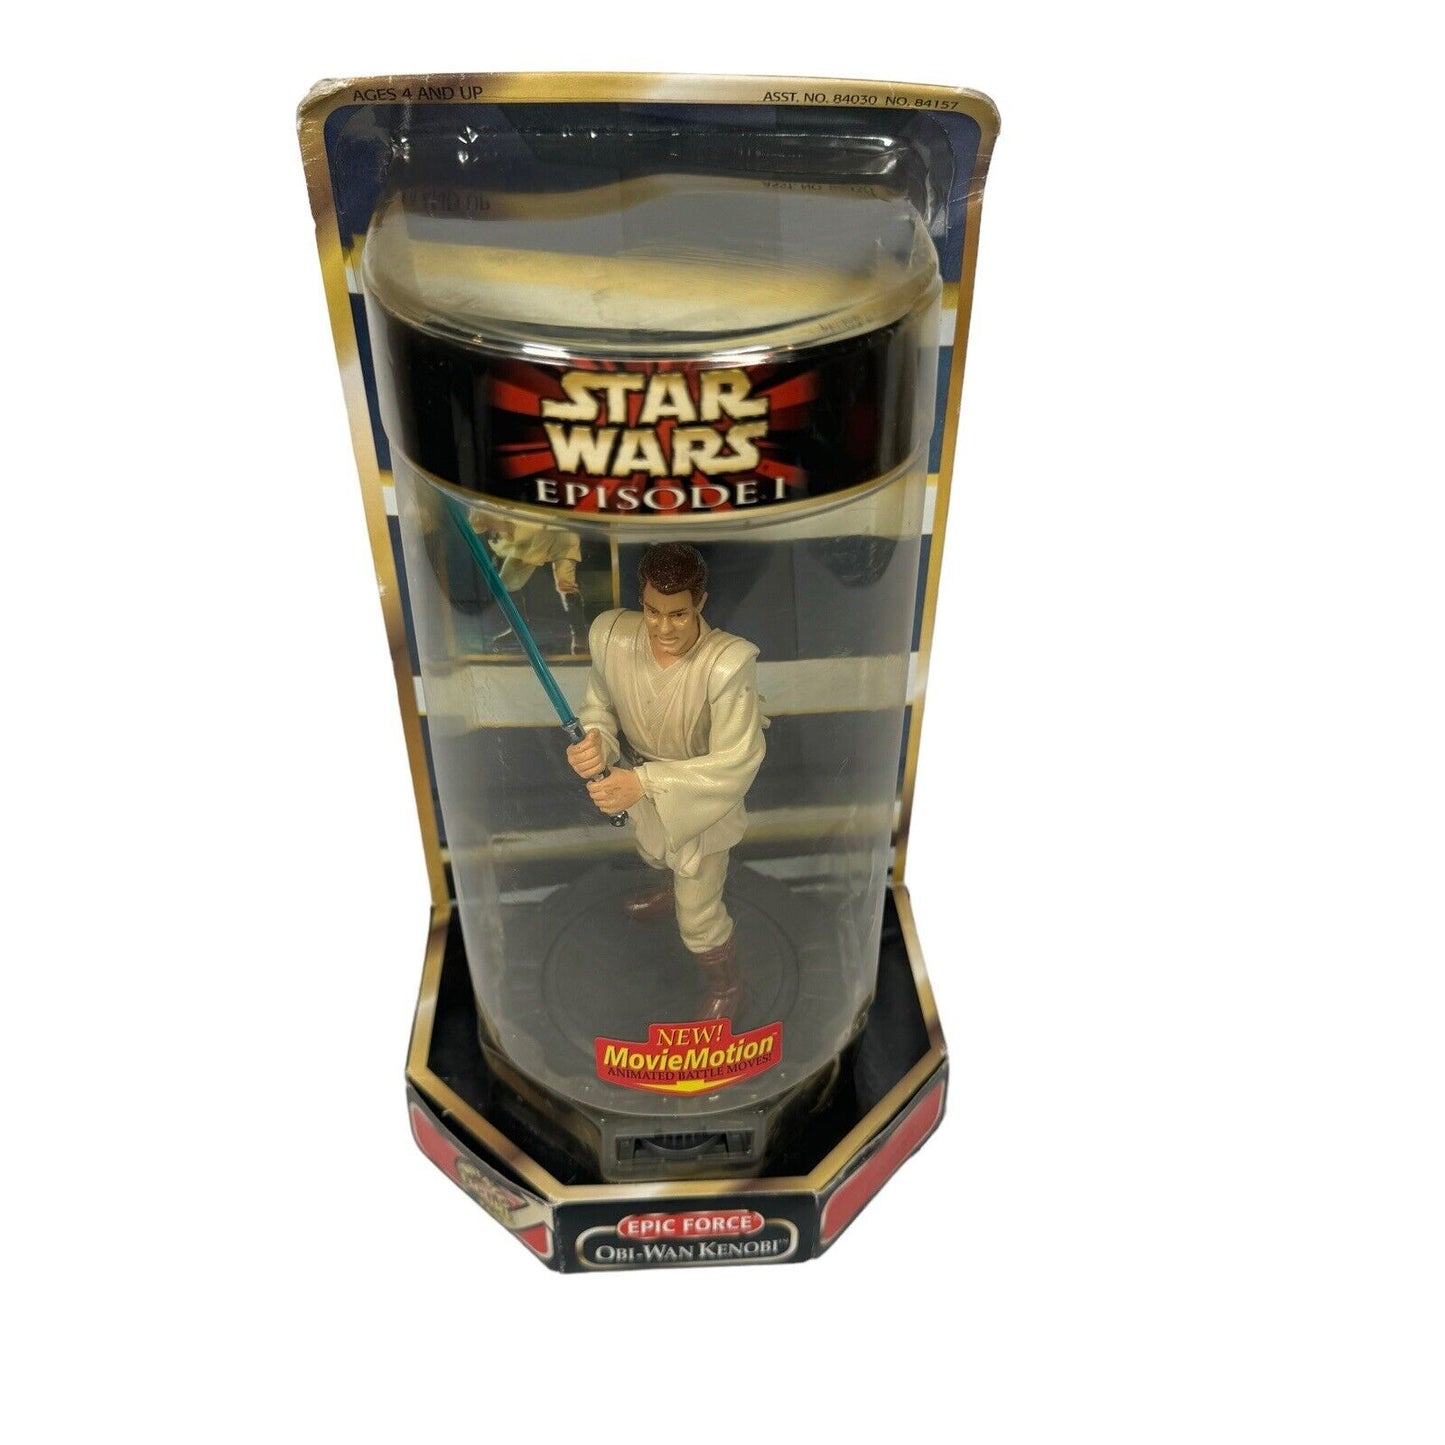 Star Wars Episode 1 Epic Force Obi-Wan Kenobi Vintage 1991 Hasbro Figure